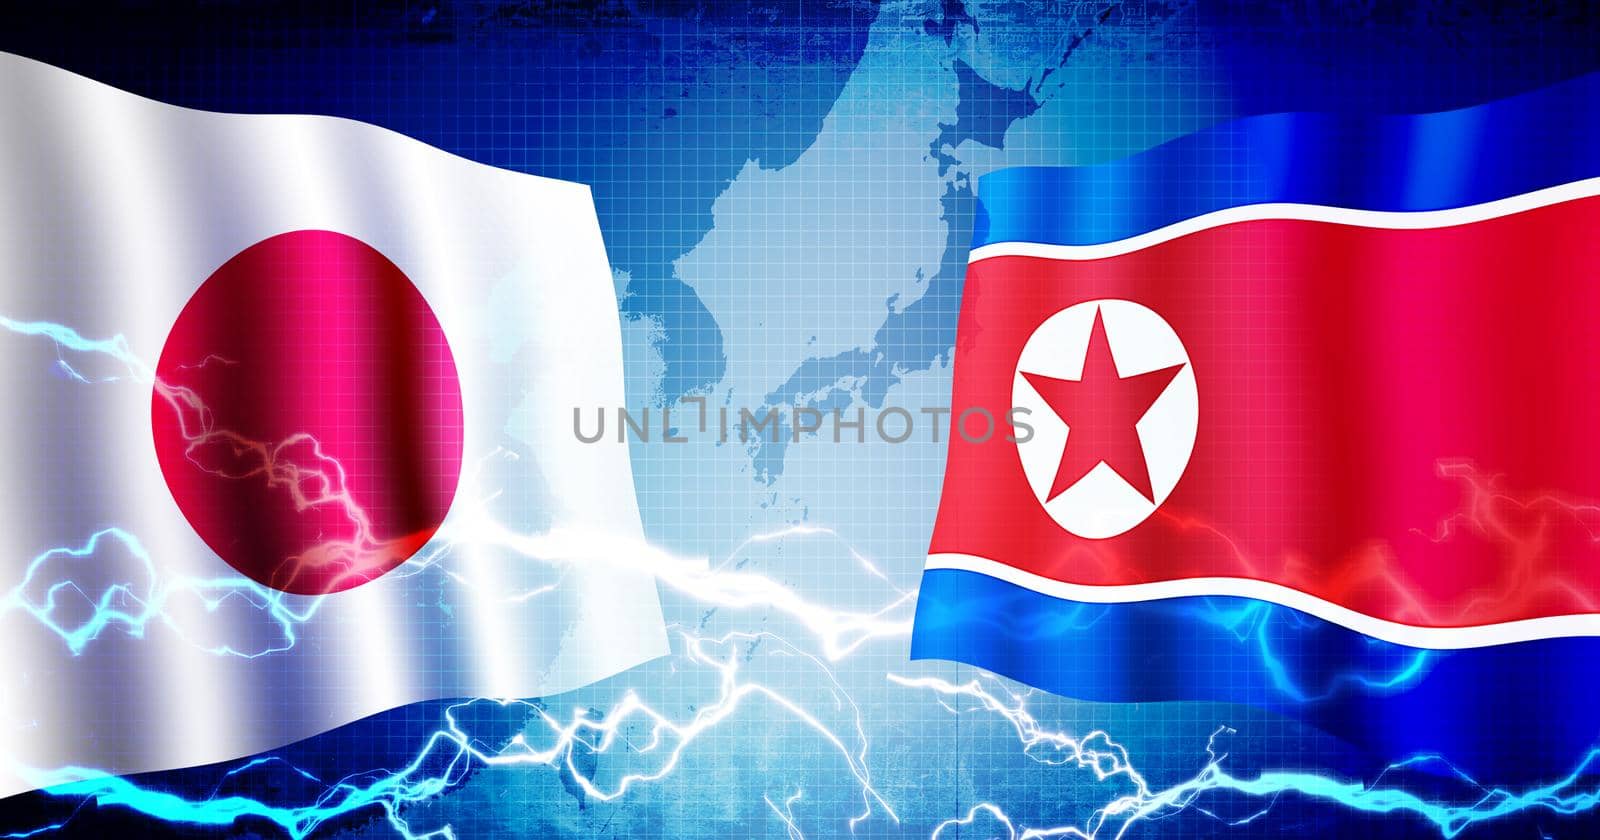 Political confrontation between Japan and North korea / web banner background illustration by barks